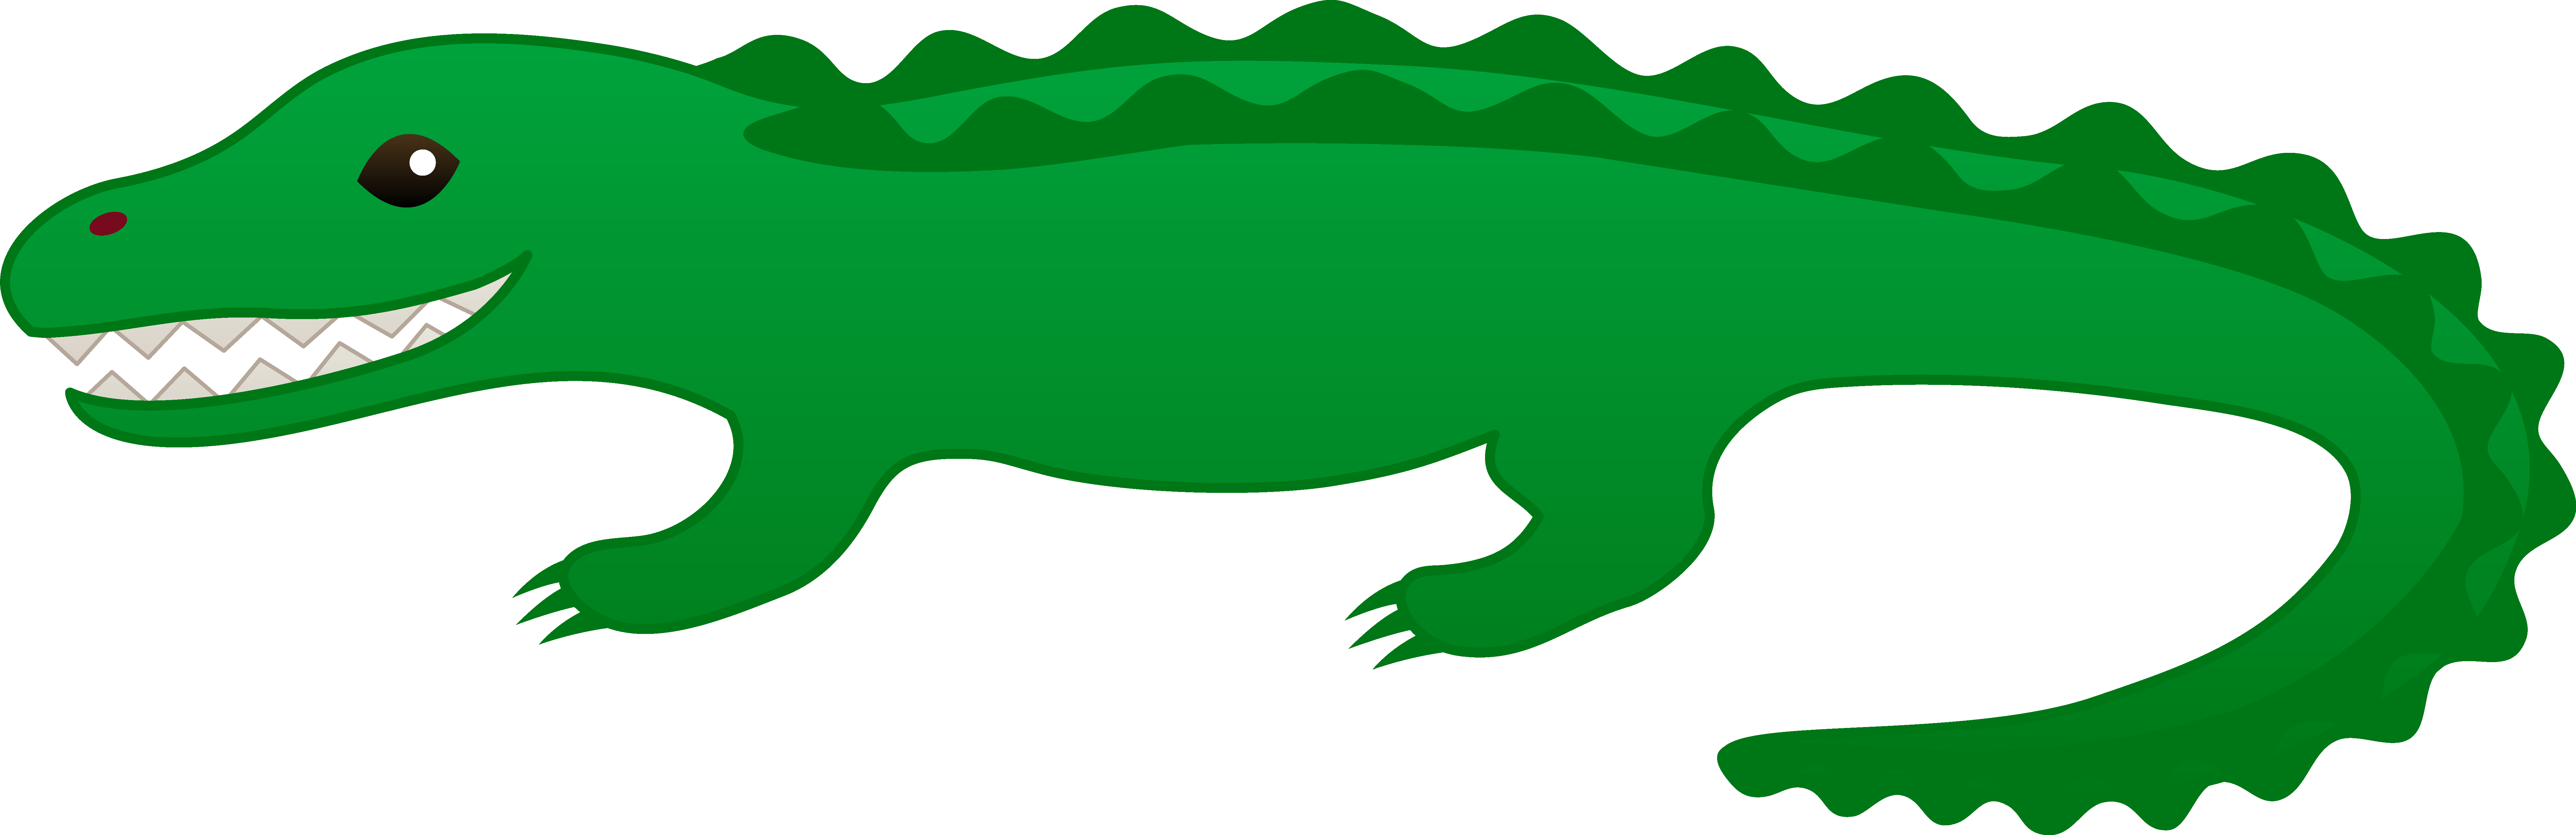 Green alligator clipart jpg